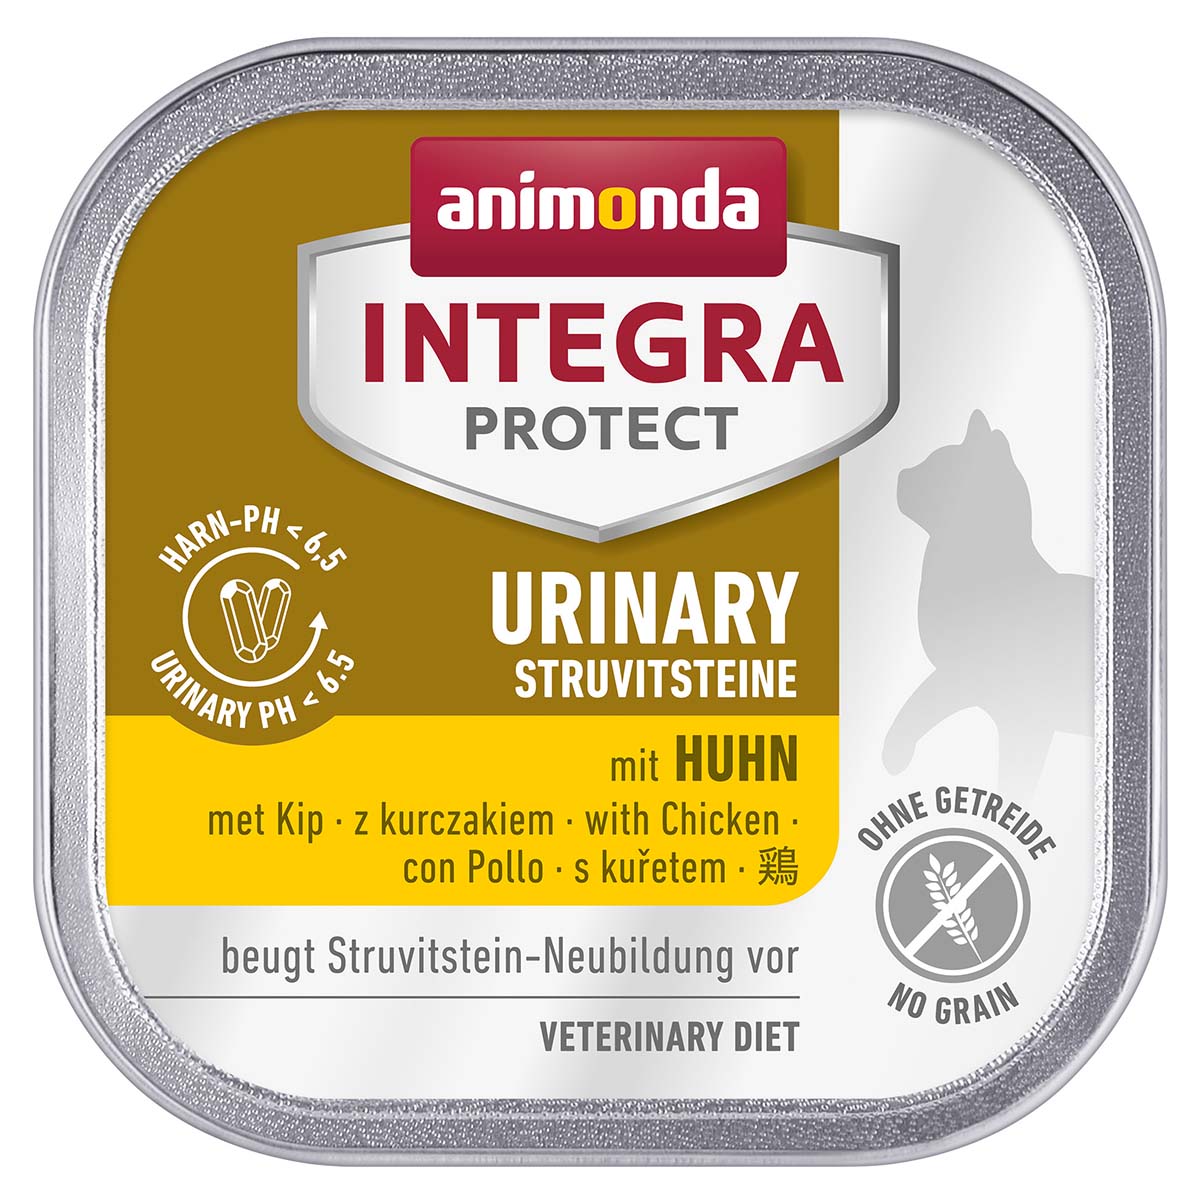 animonda INTEGRA PROTECT Adult Urinary Struvitstein mit Huhn 32x100g von animonda Integra Protect